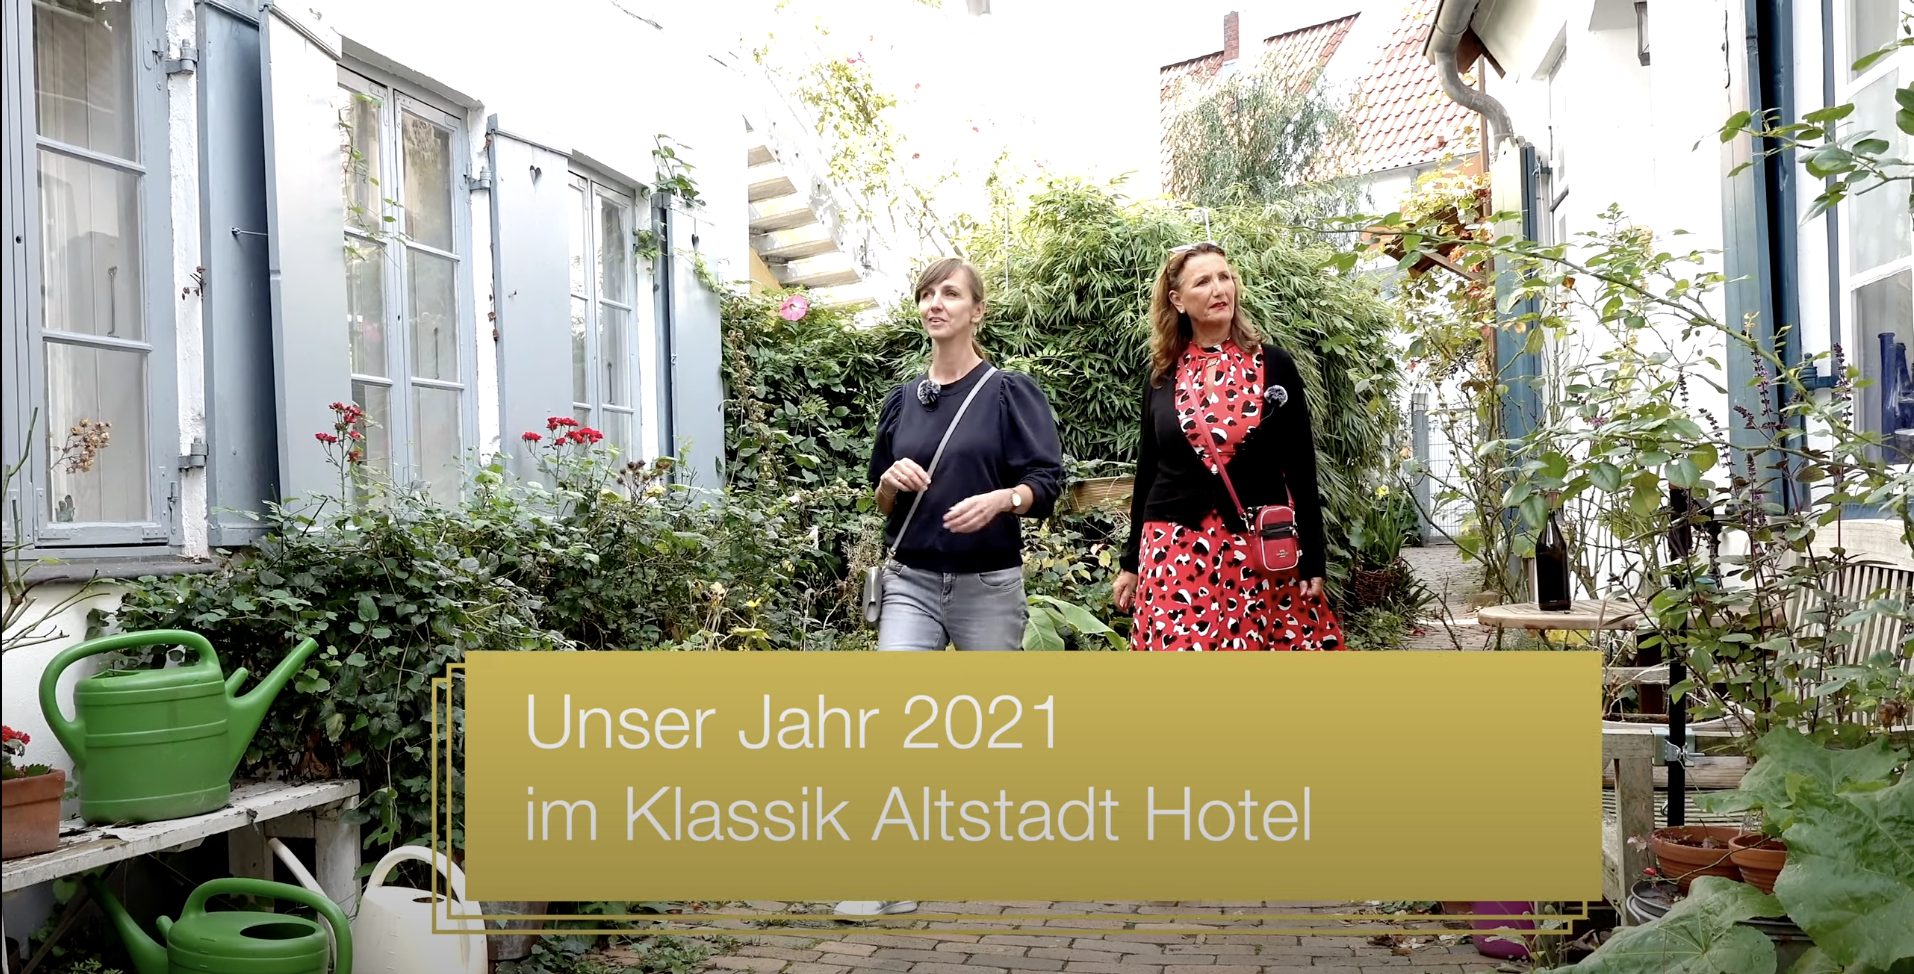 Der Klassik Altstadt Hotel Jahresrückblick 2021